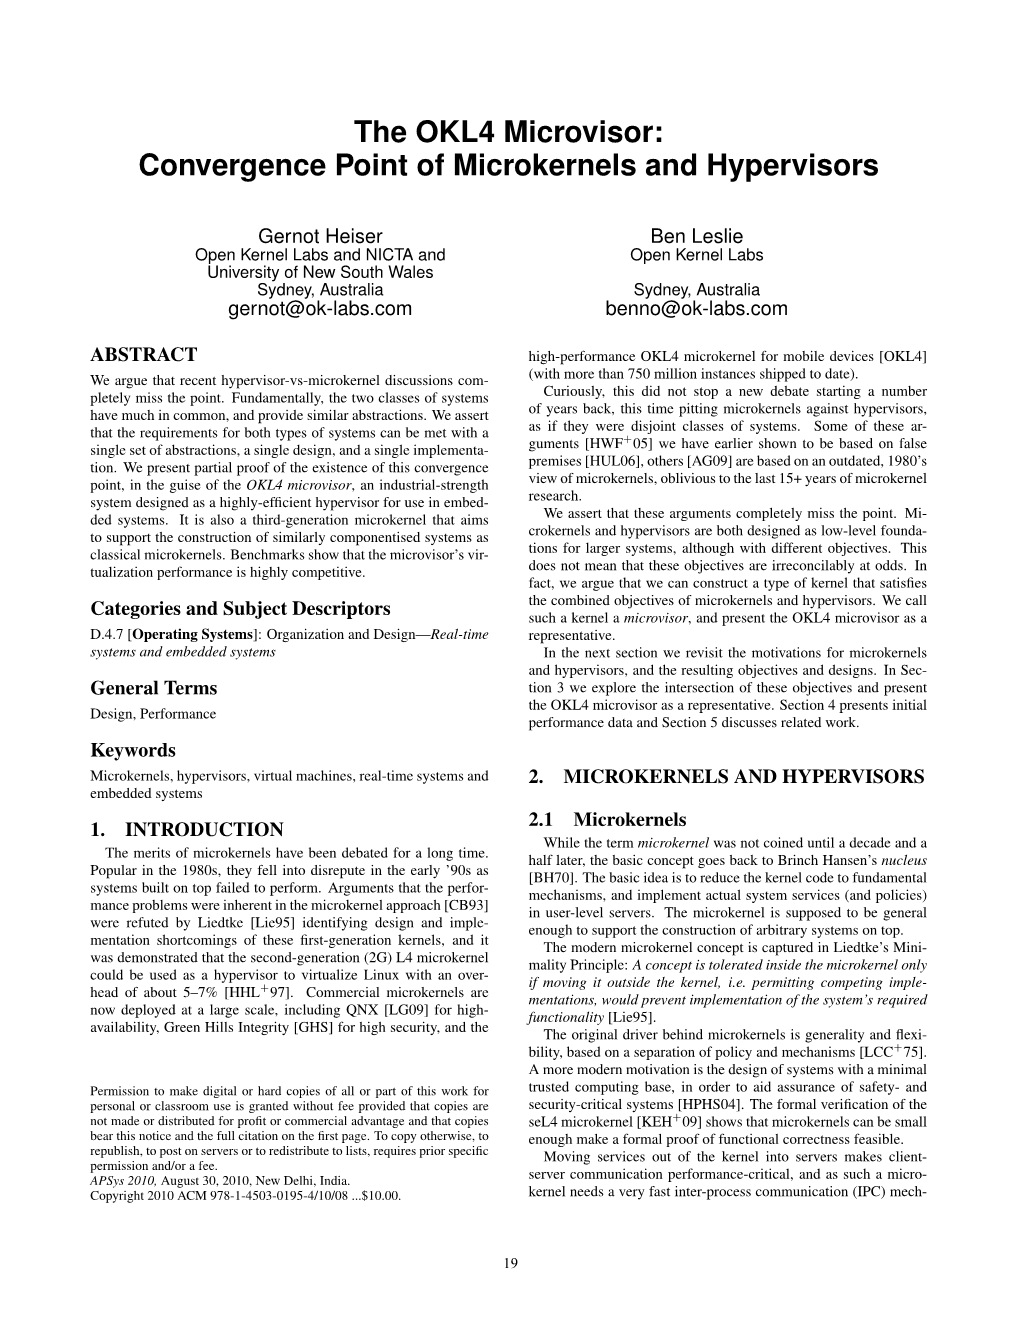 The OKL4 Microvisor: Convergence Point of Microkernels and Hypervisors